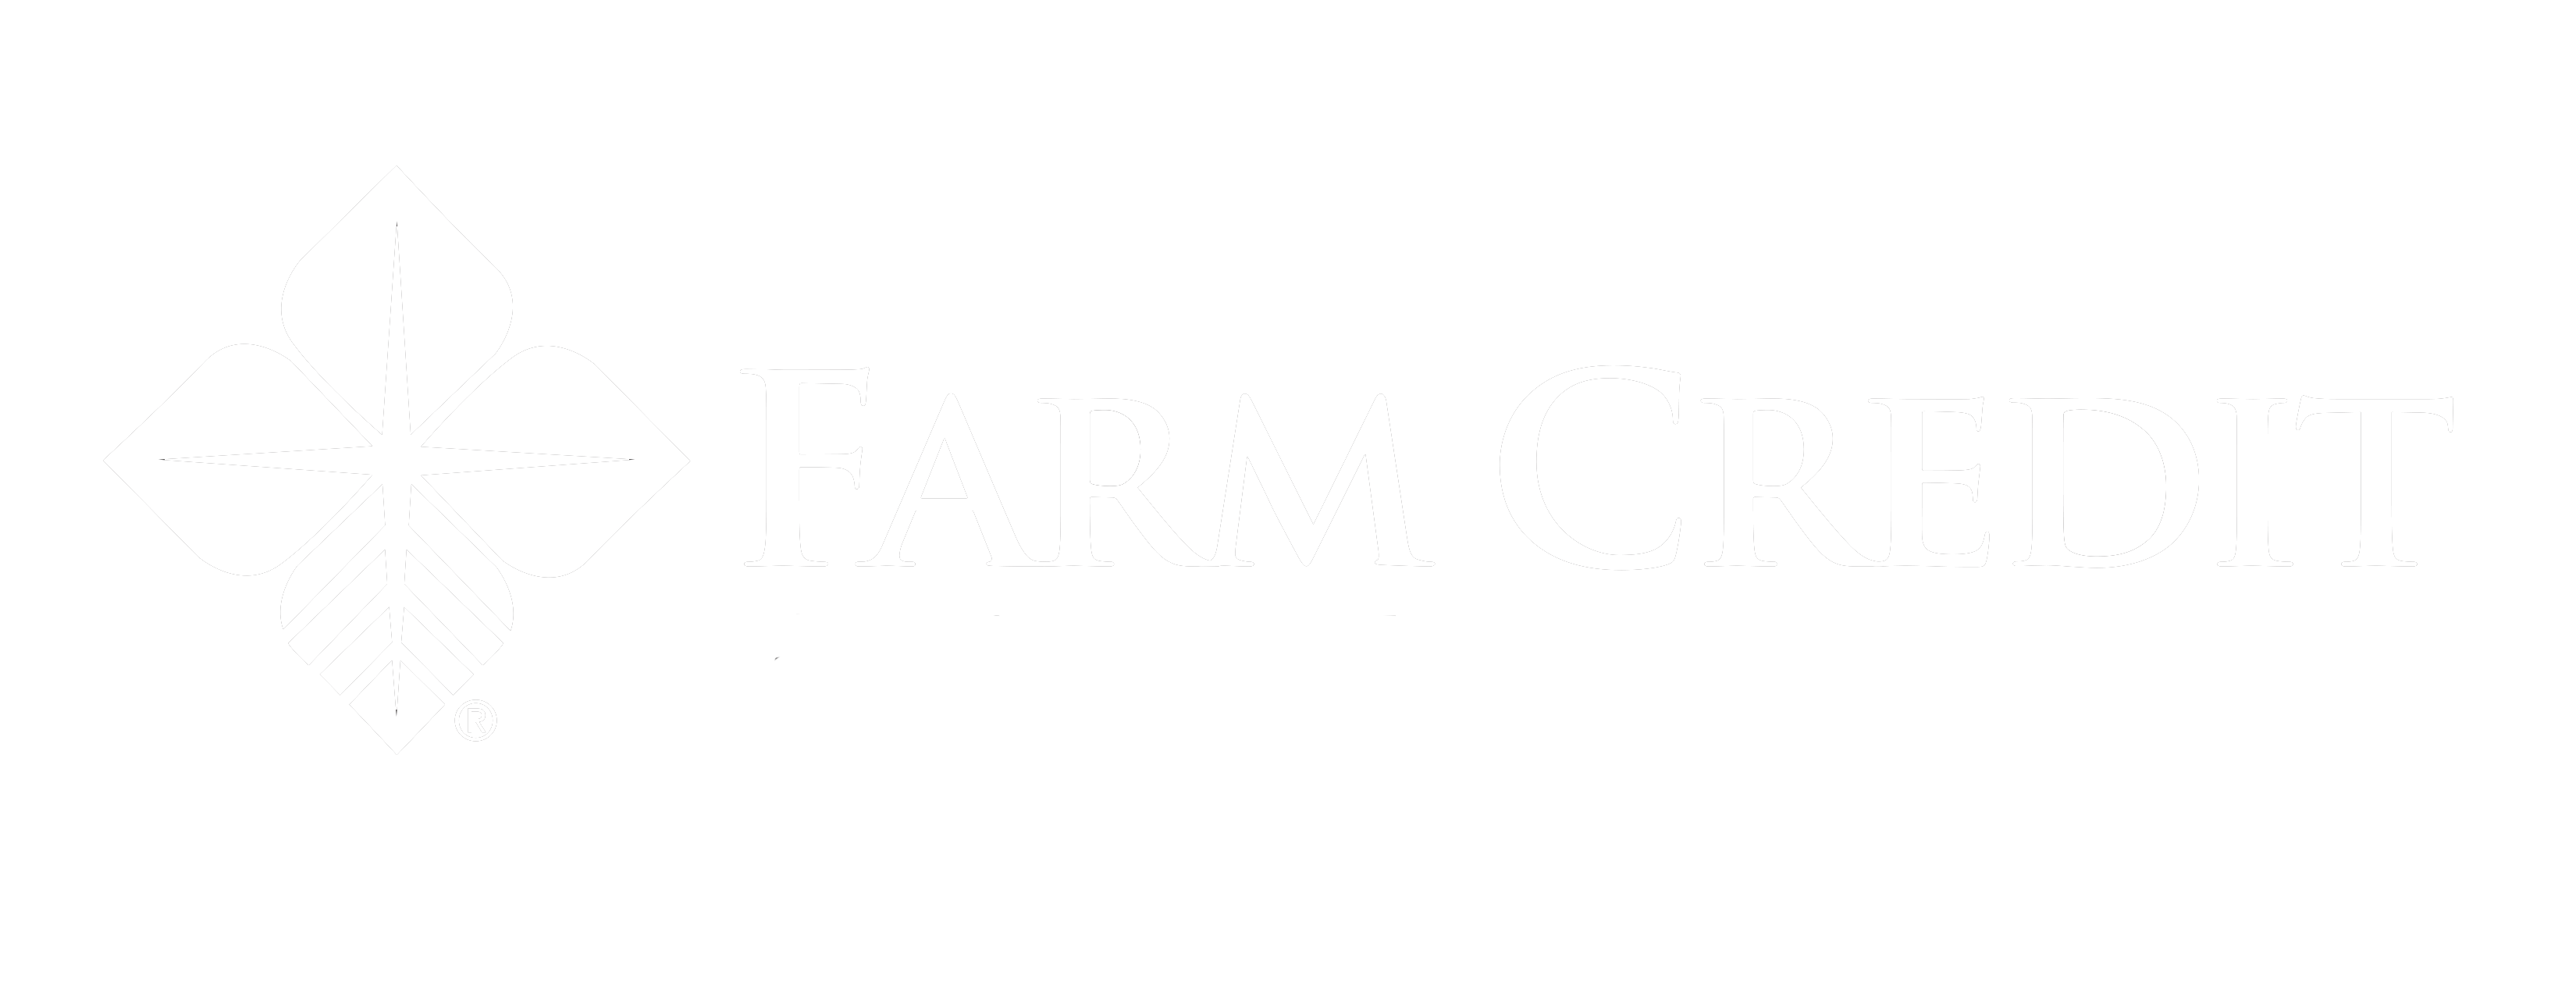 The Farm Credit logo